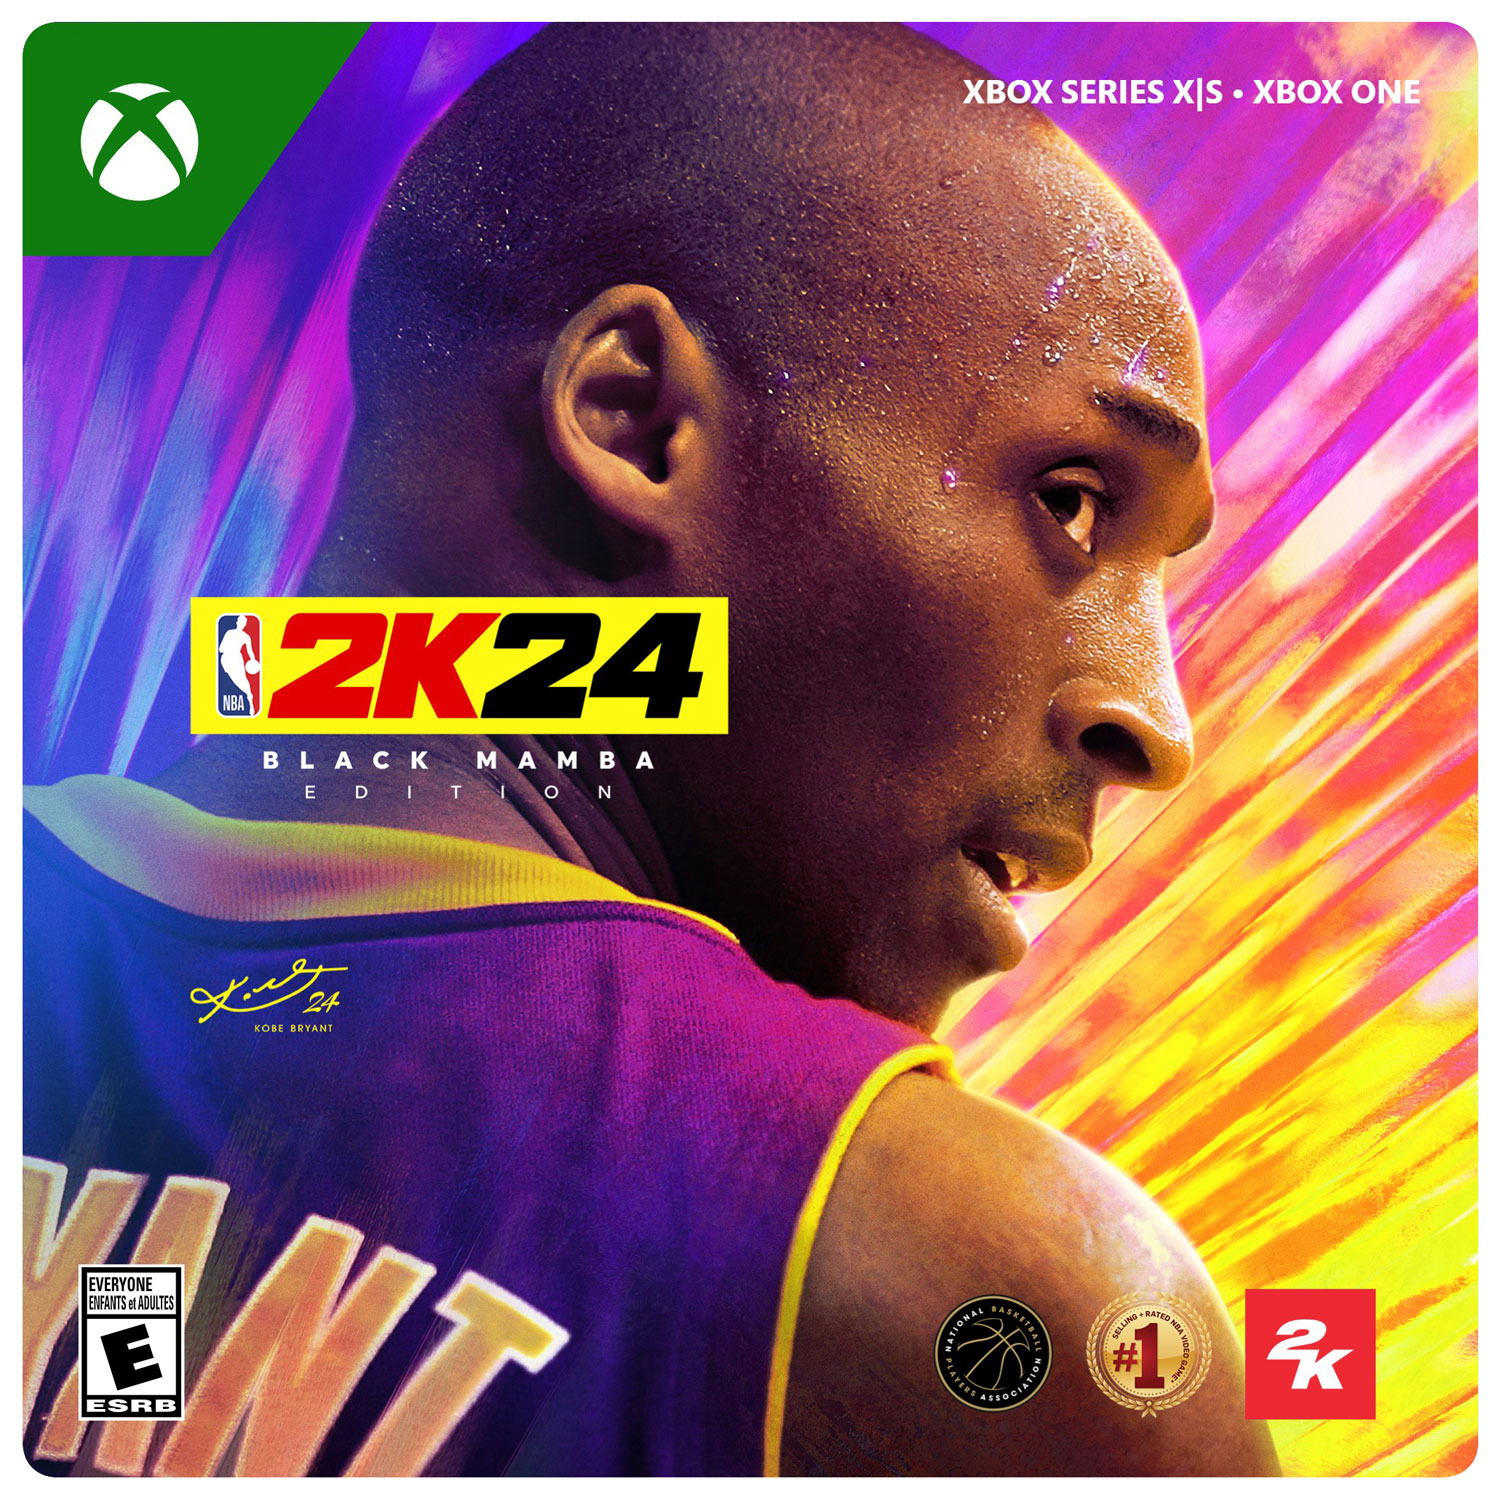 NBA 2K24 Black Mamba Edition (Xbox Series X / Xbox One) - Digital Download